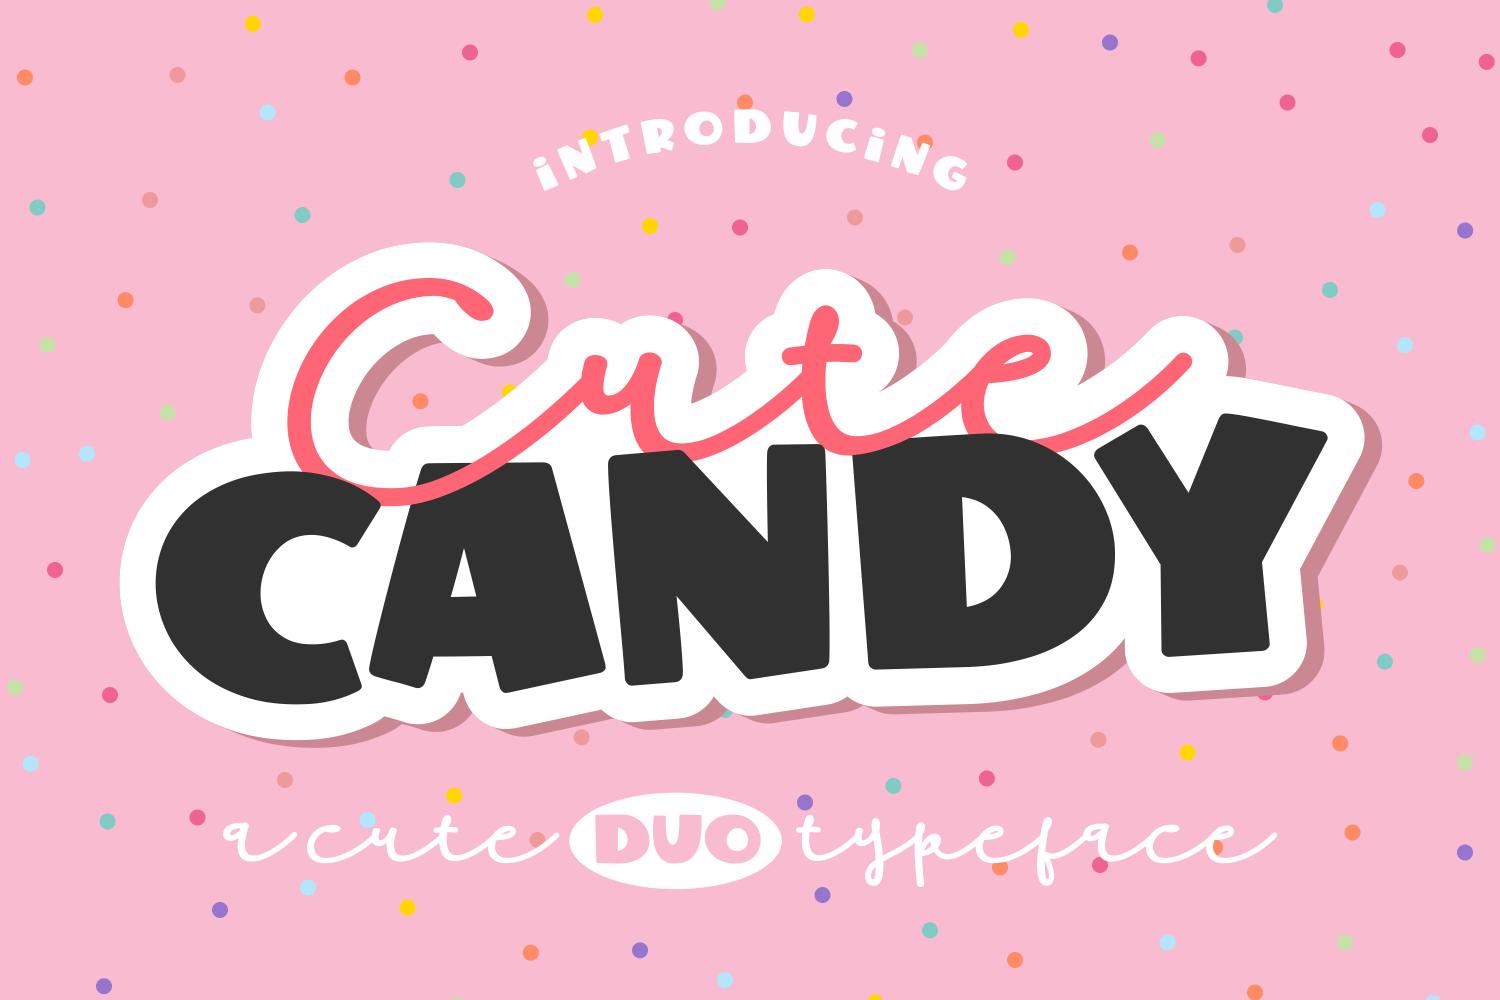 Cute Candy Font